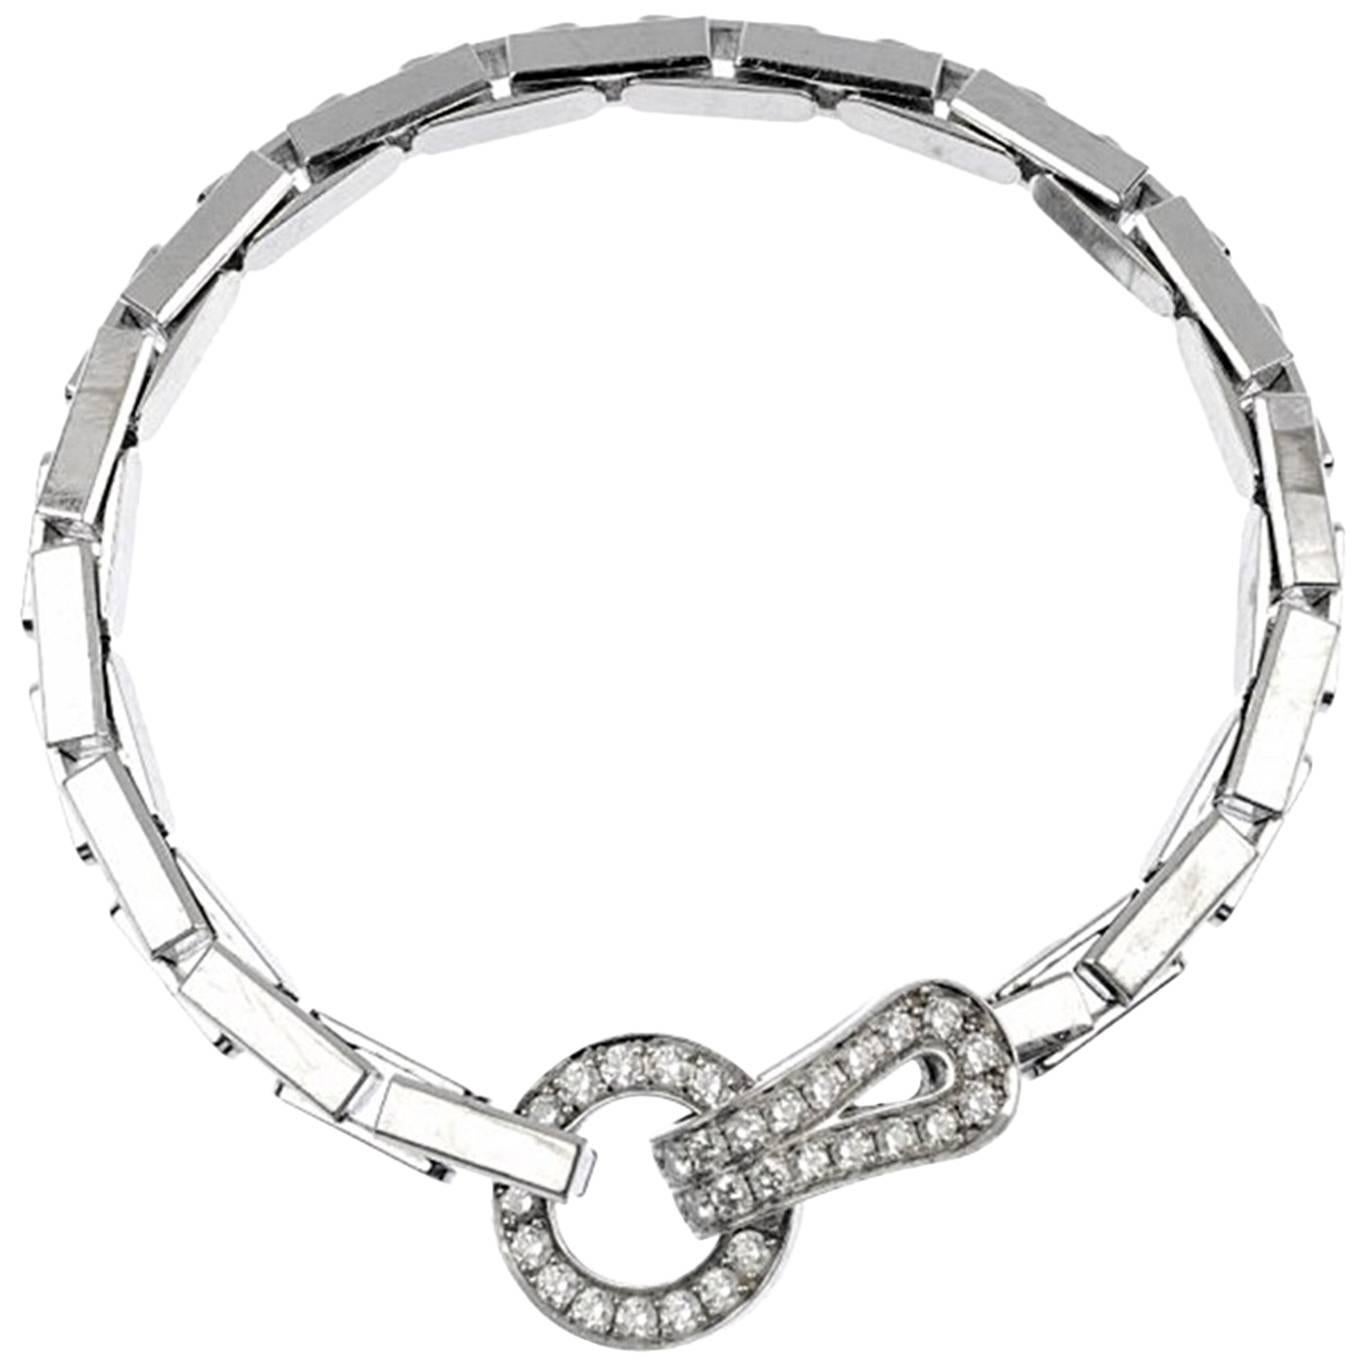 Cartier Agrafe Bracelet with Brilliant Cut Diamonds